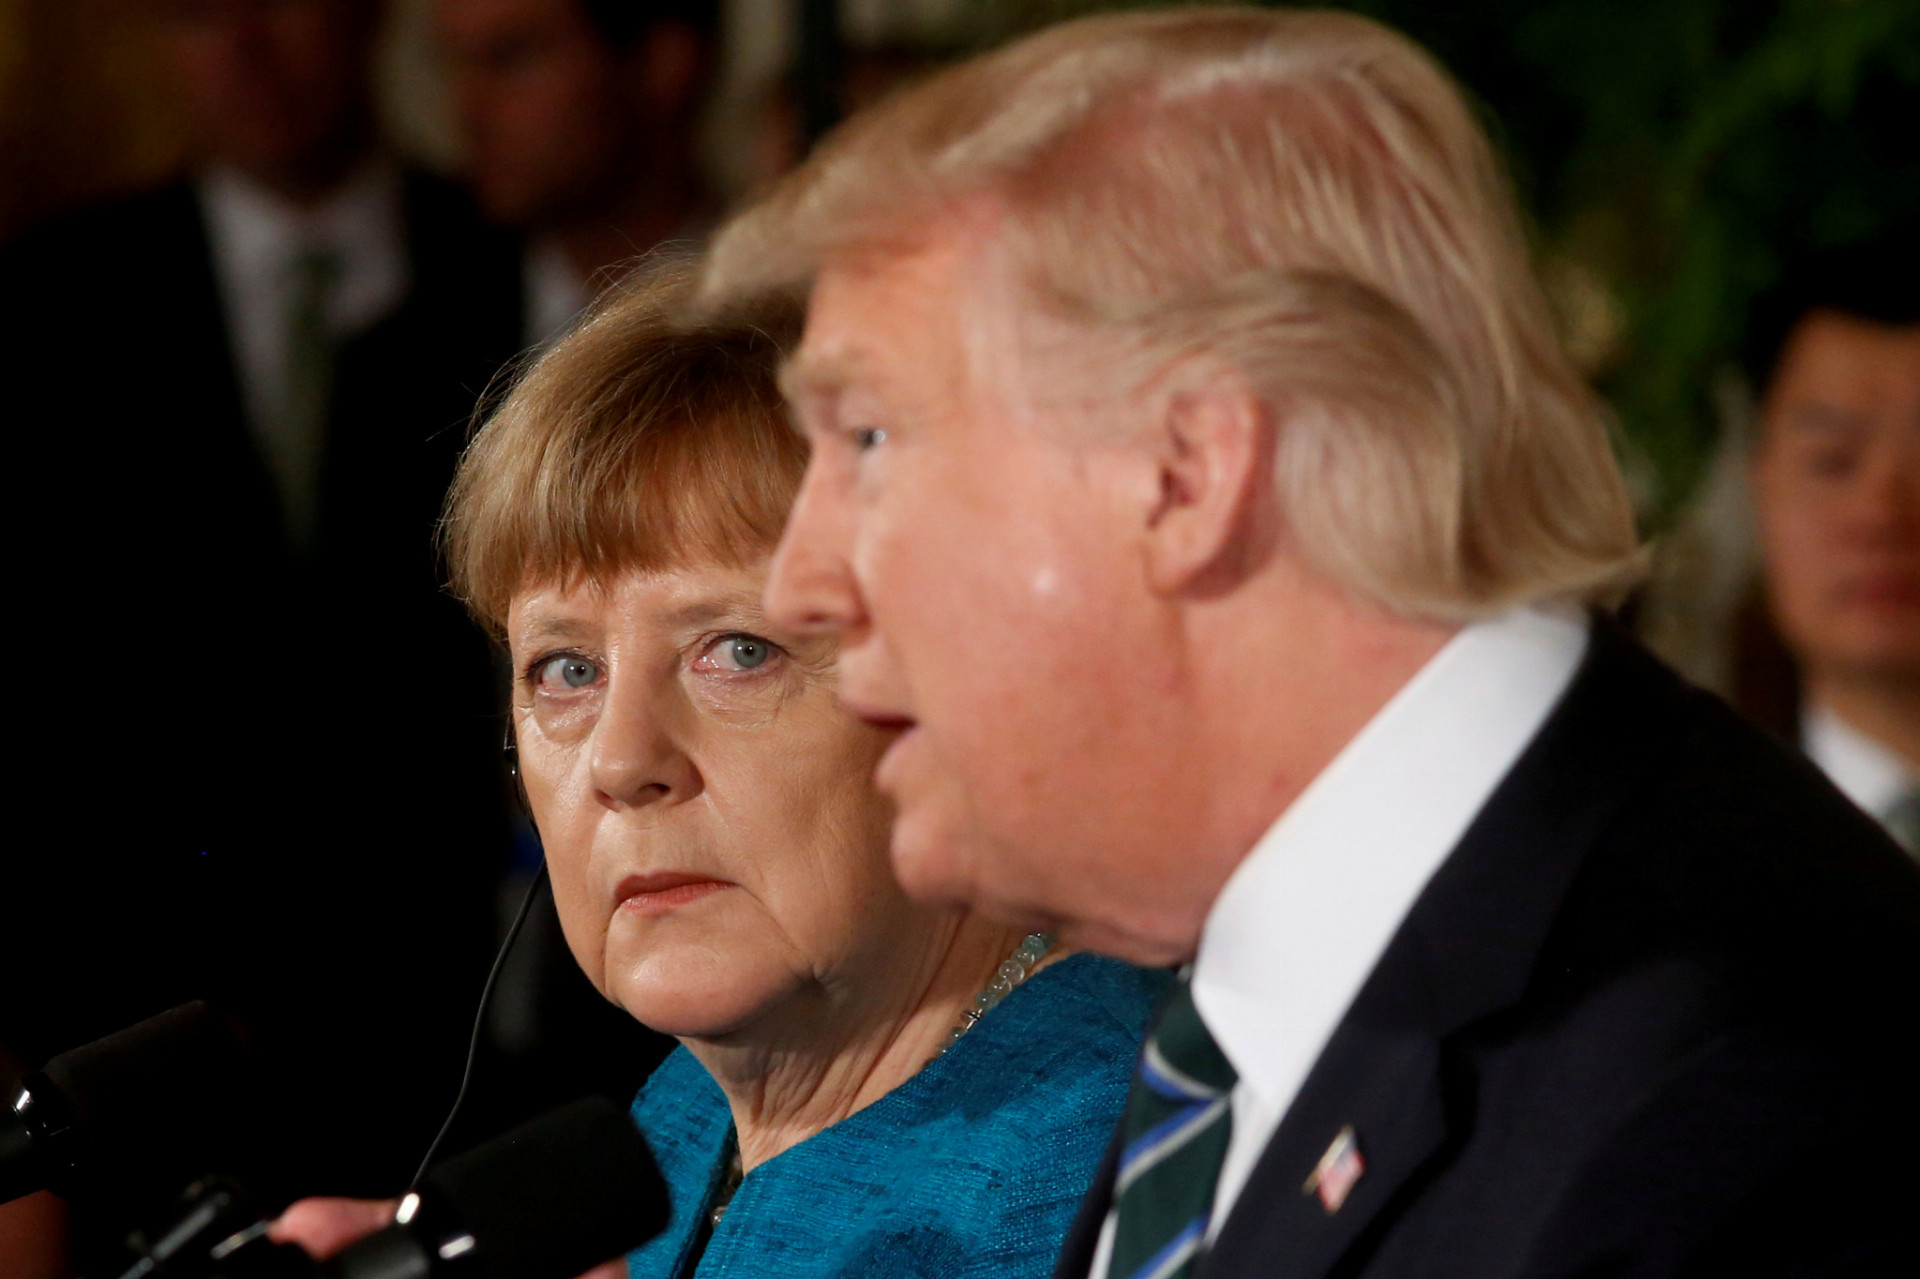 Angela Merkelová a Donald Trump